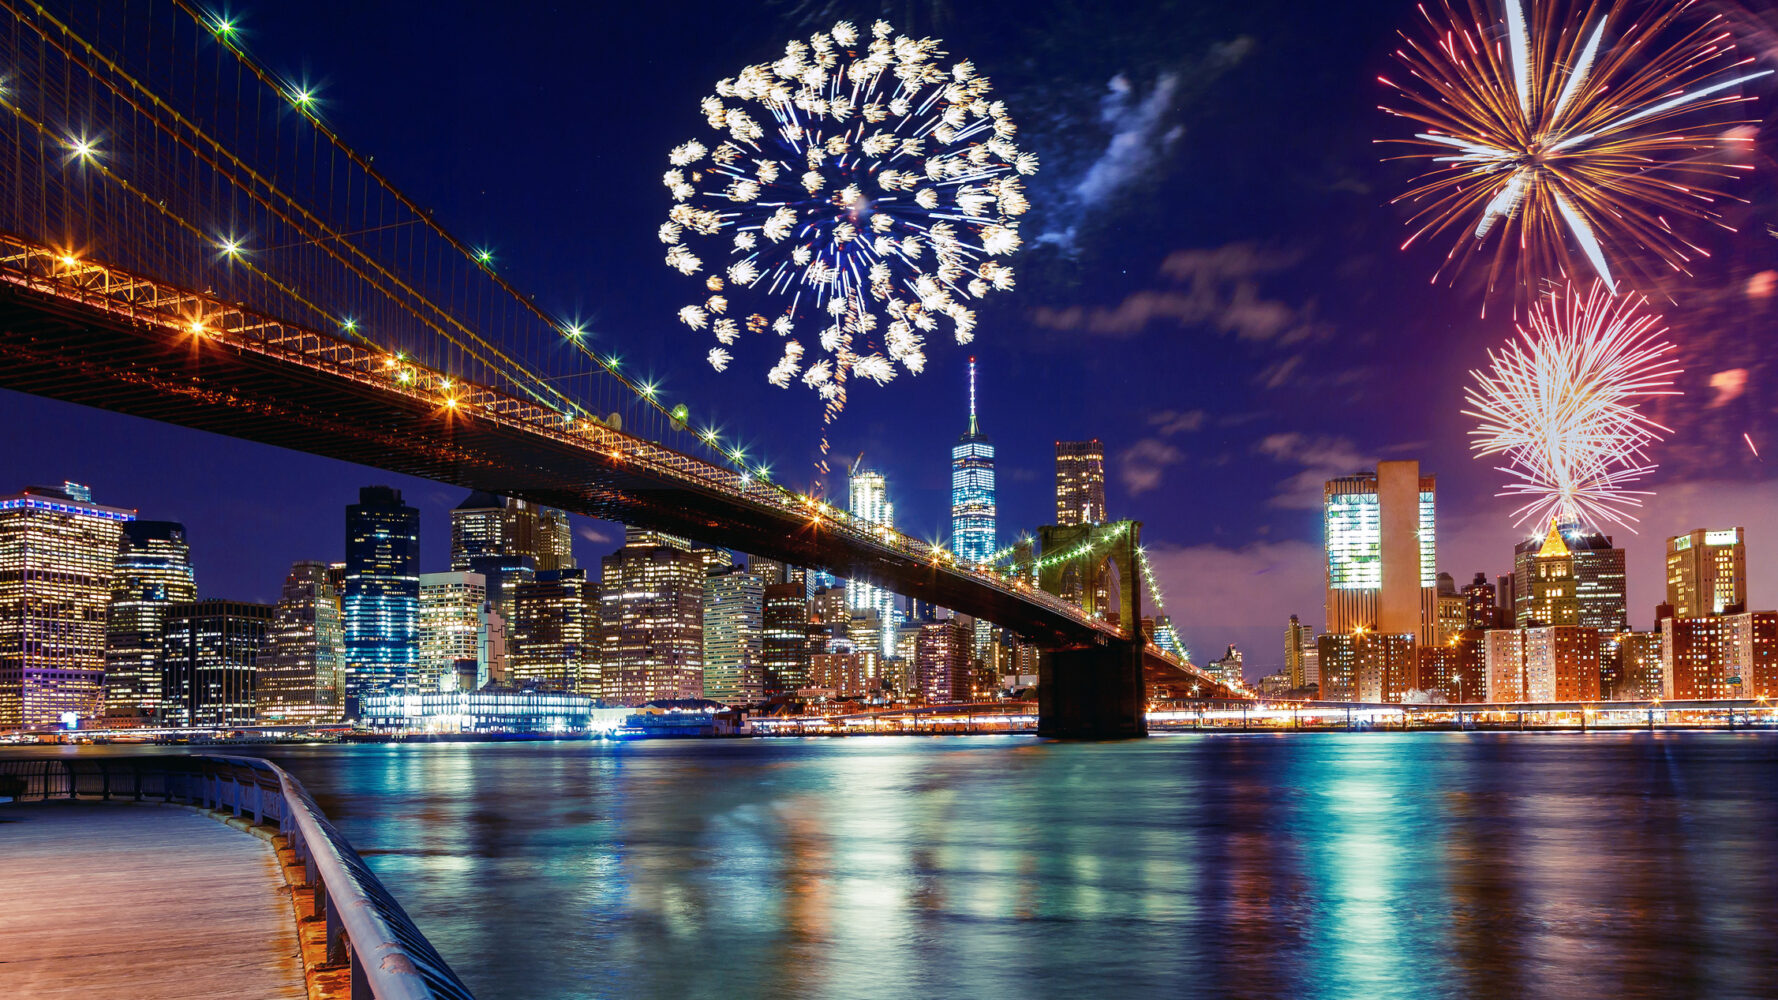 fireworks pepper the nighttime skyline of Manhattan